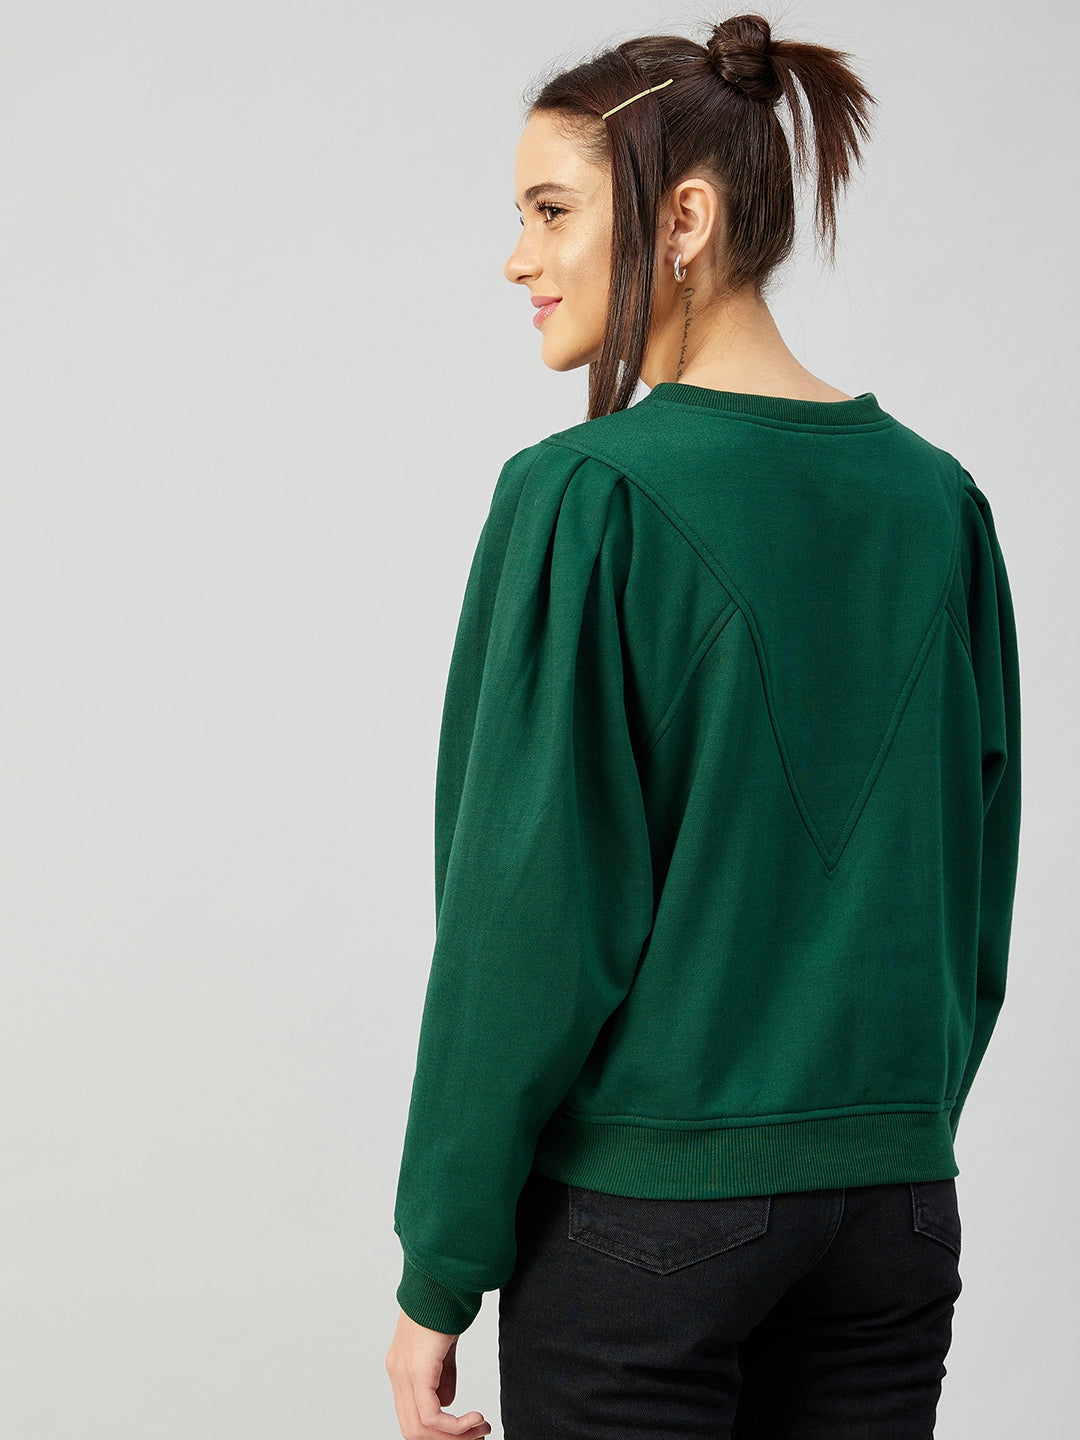 Athena Women Green Fleece Sweatshirt - Athena Lifestyle